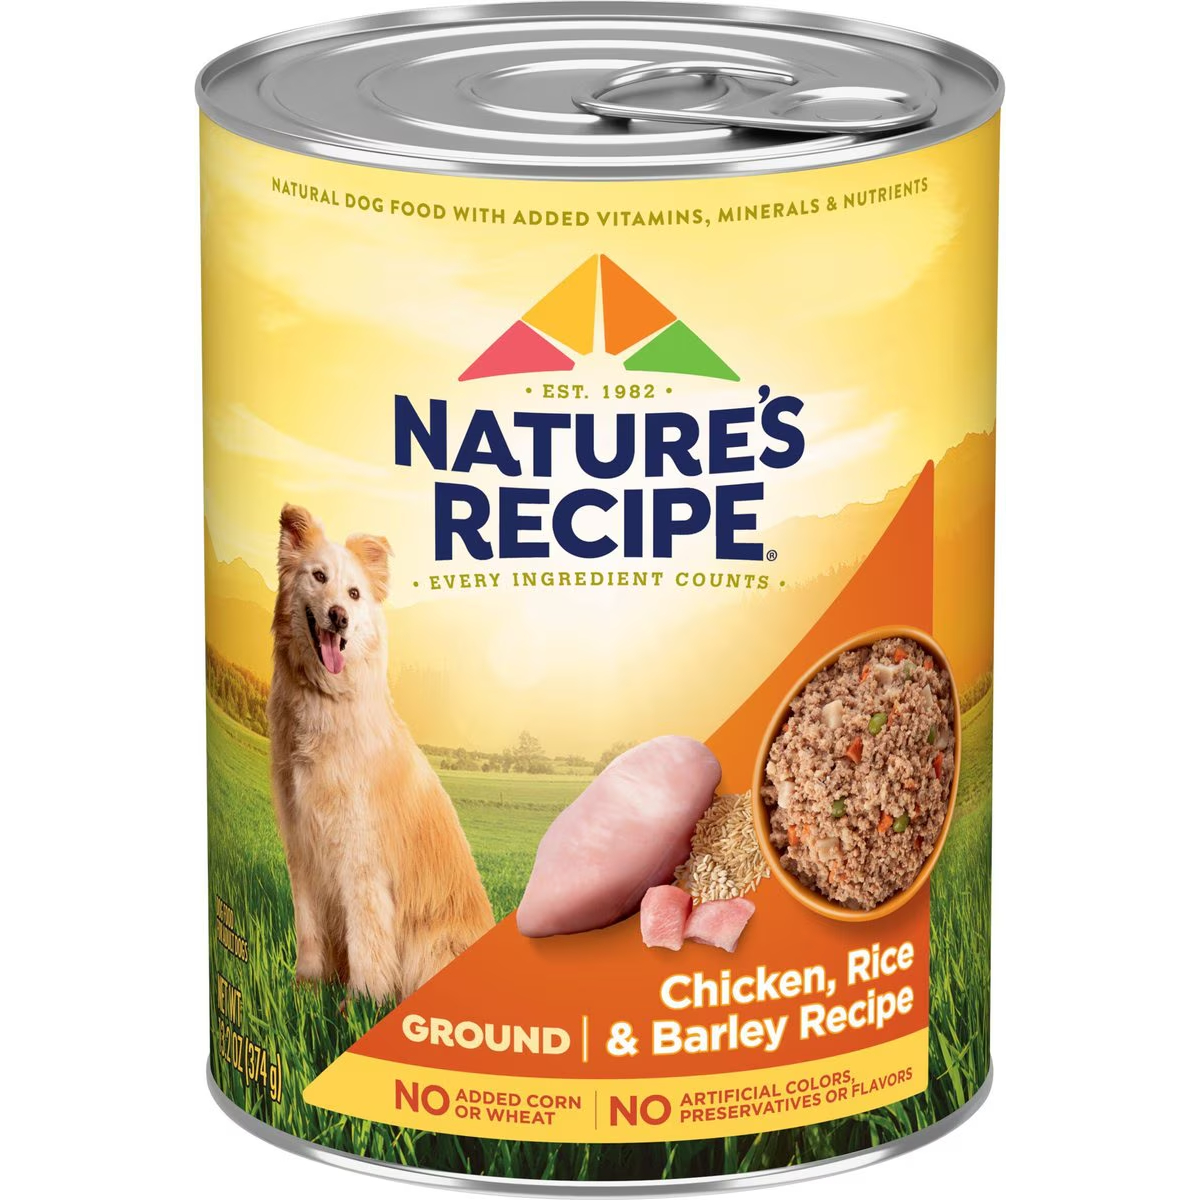 Nature's Recipe Ground Chicken, Rice & Barley Recipe Wet Dog Food